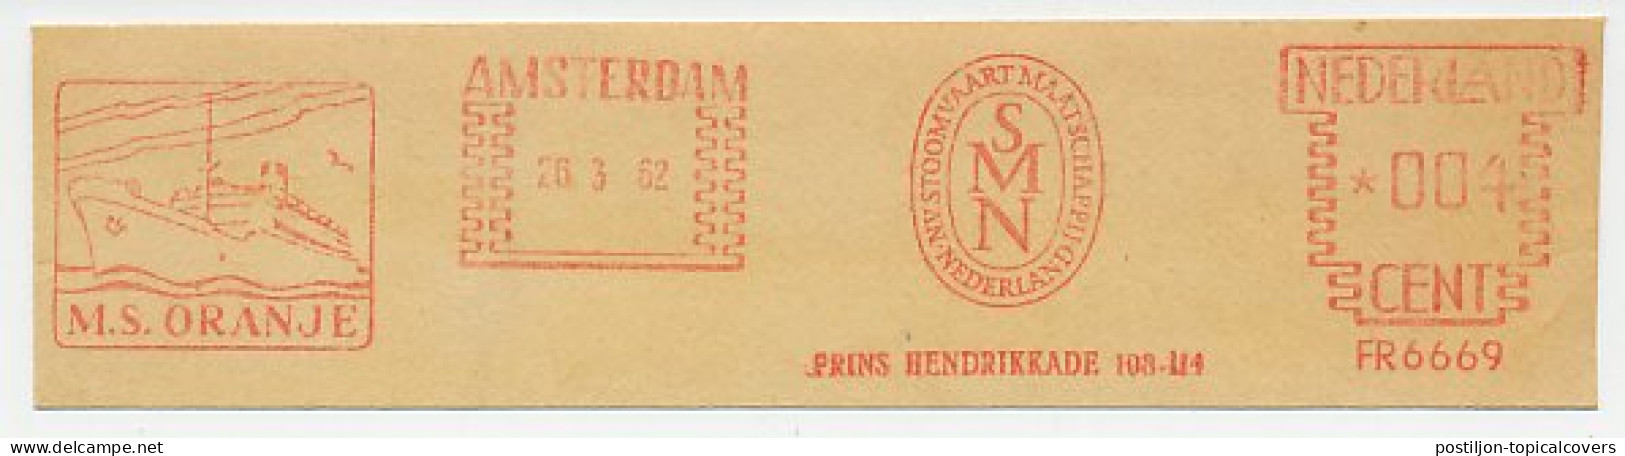 Meter Cut Netherlands 1962 SMN - Steamship Company Netherlands - M.S. Oranje - Ocean Liner - Boten